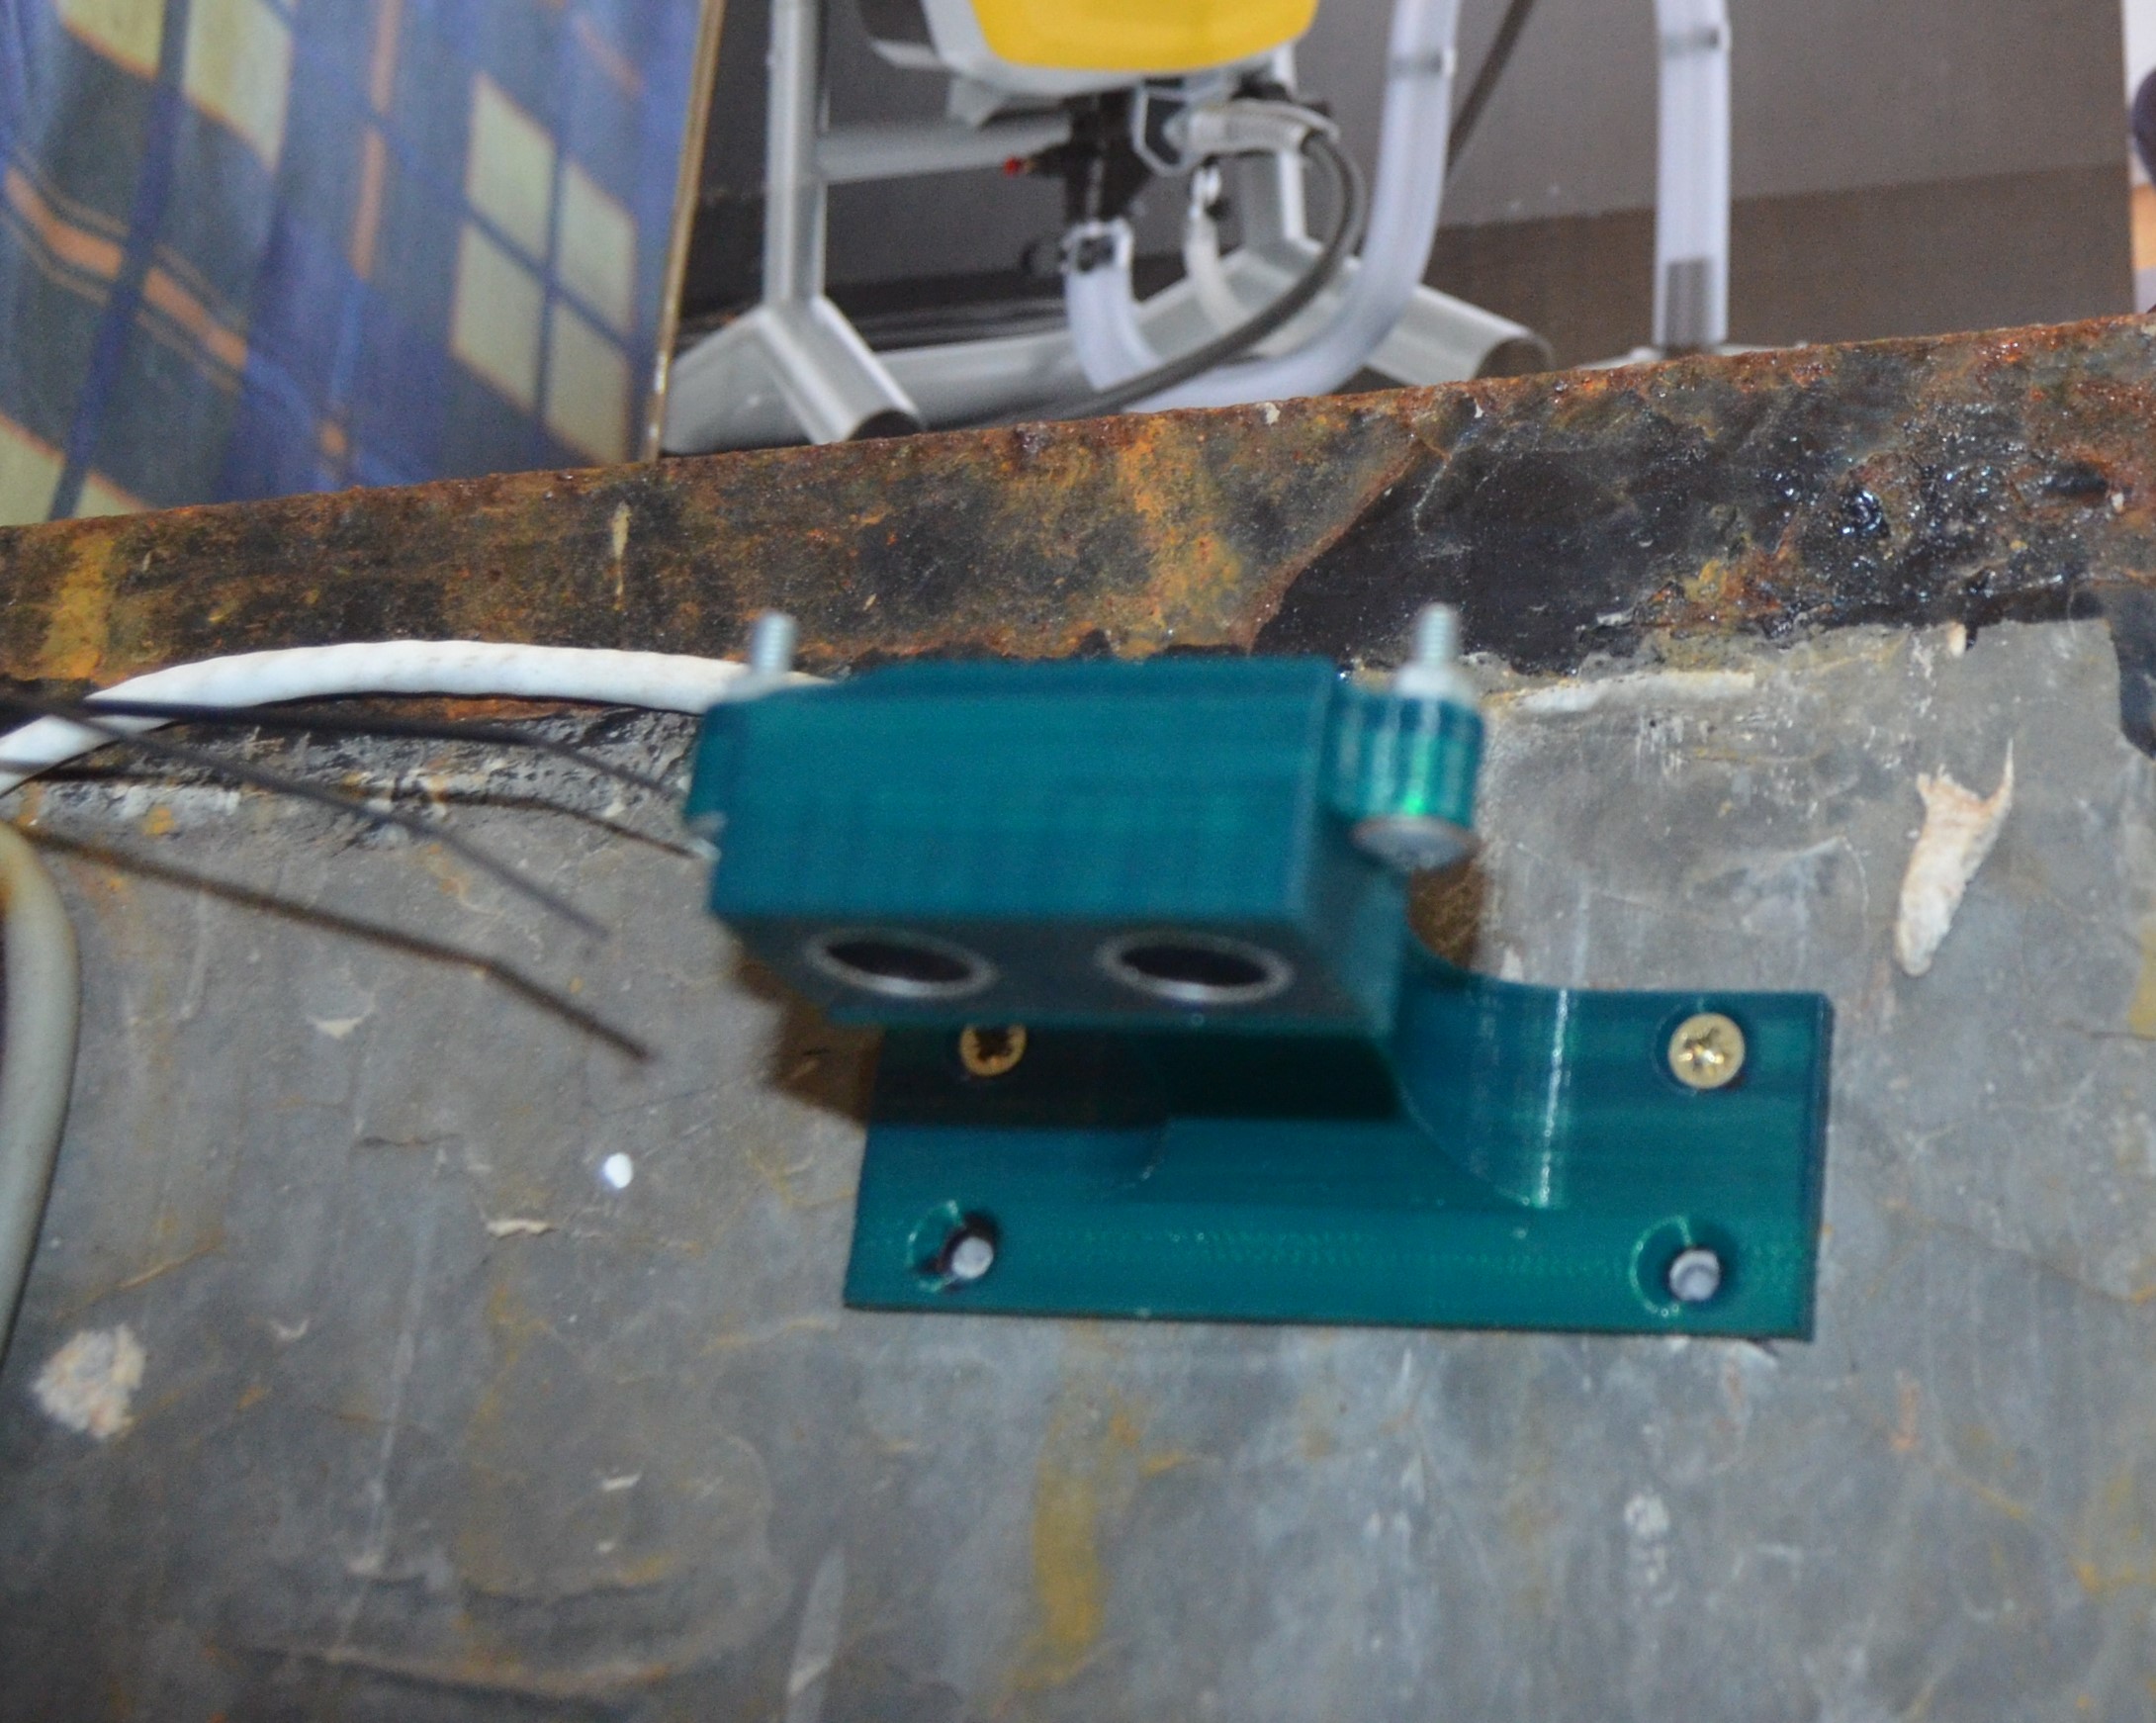 HC-SR04 ultrasonic sensor, wall support